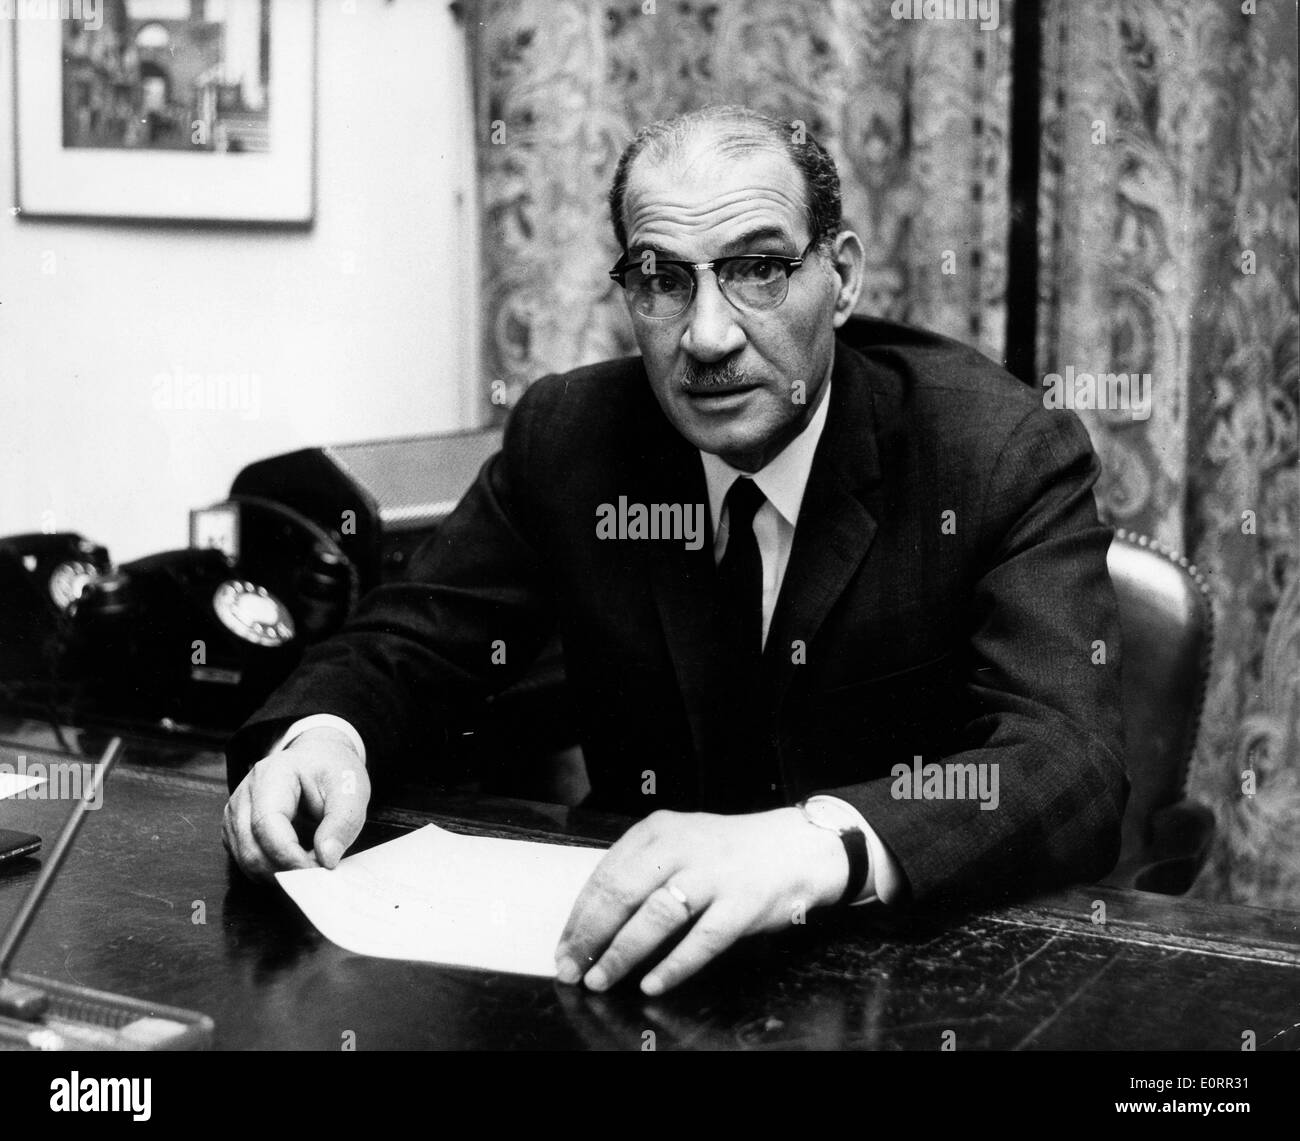 Ambassador Hassan Elfiky at his desk Stock Photo